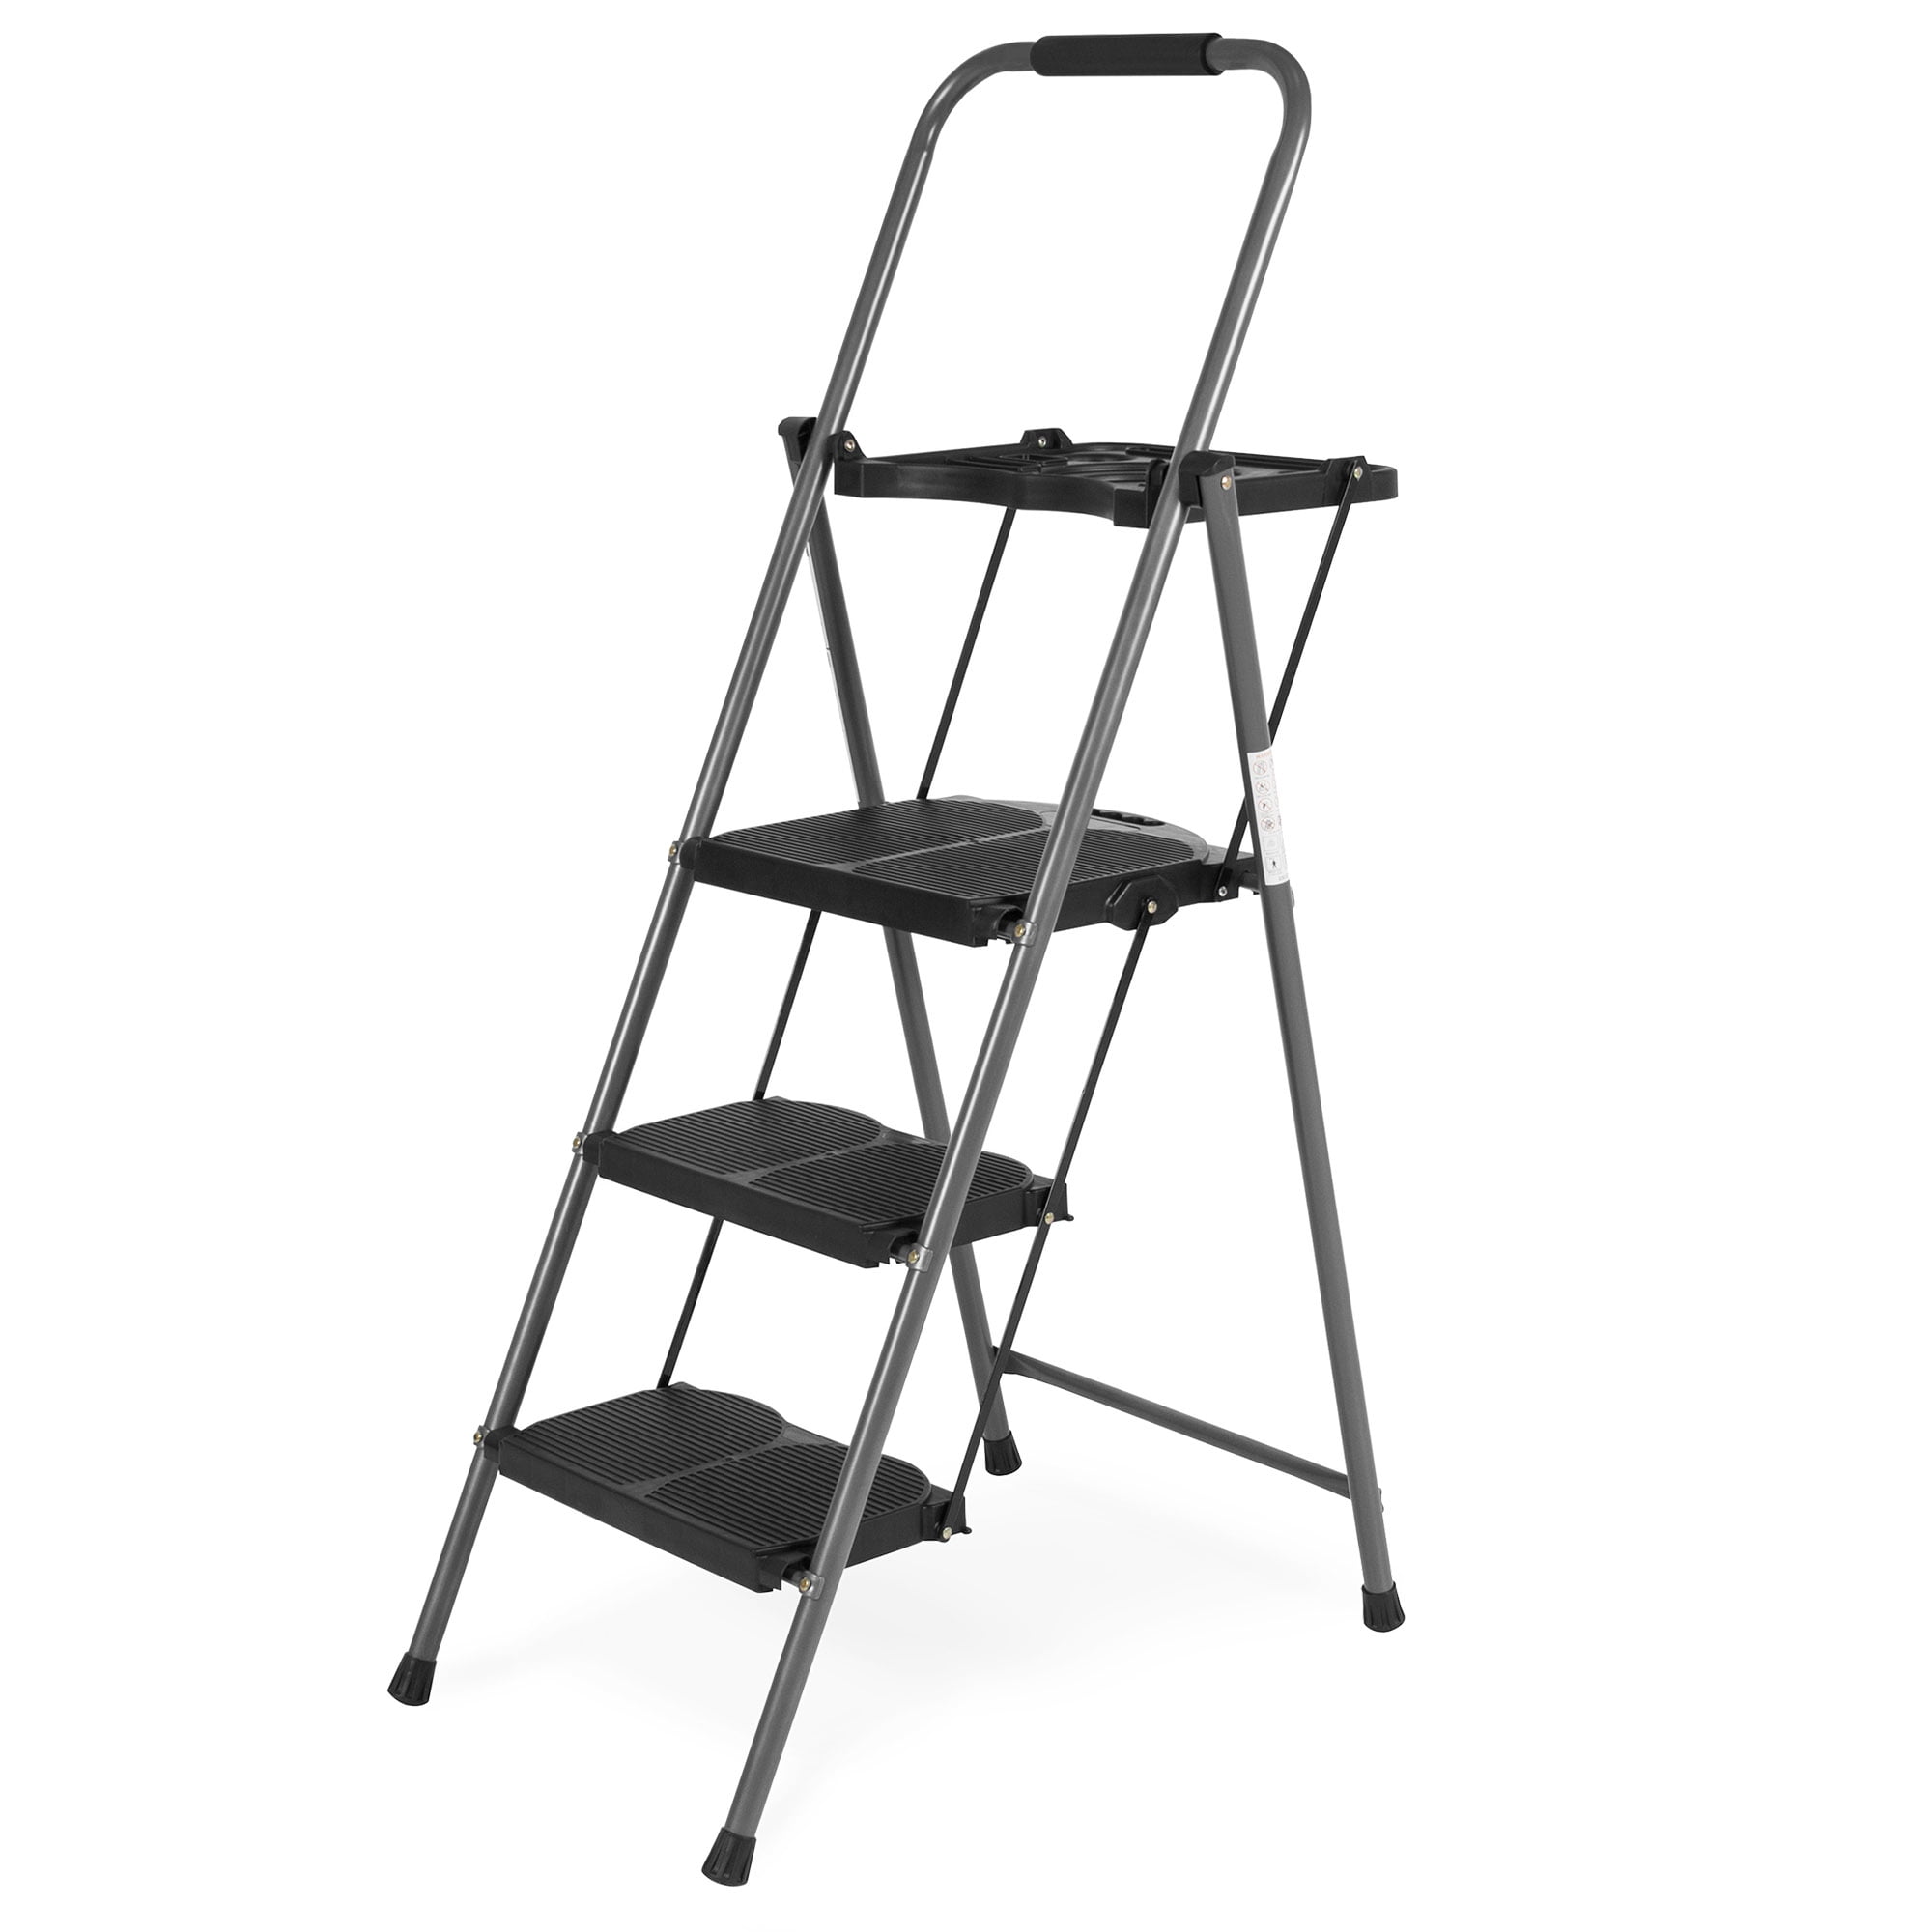 Details about   3 Step Stool Folding Ladder Non Slip Platform Tool Tray Safe Metal Easy Portable 